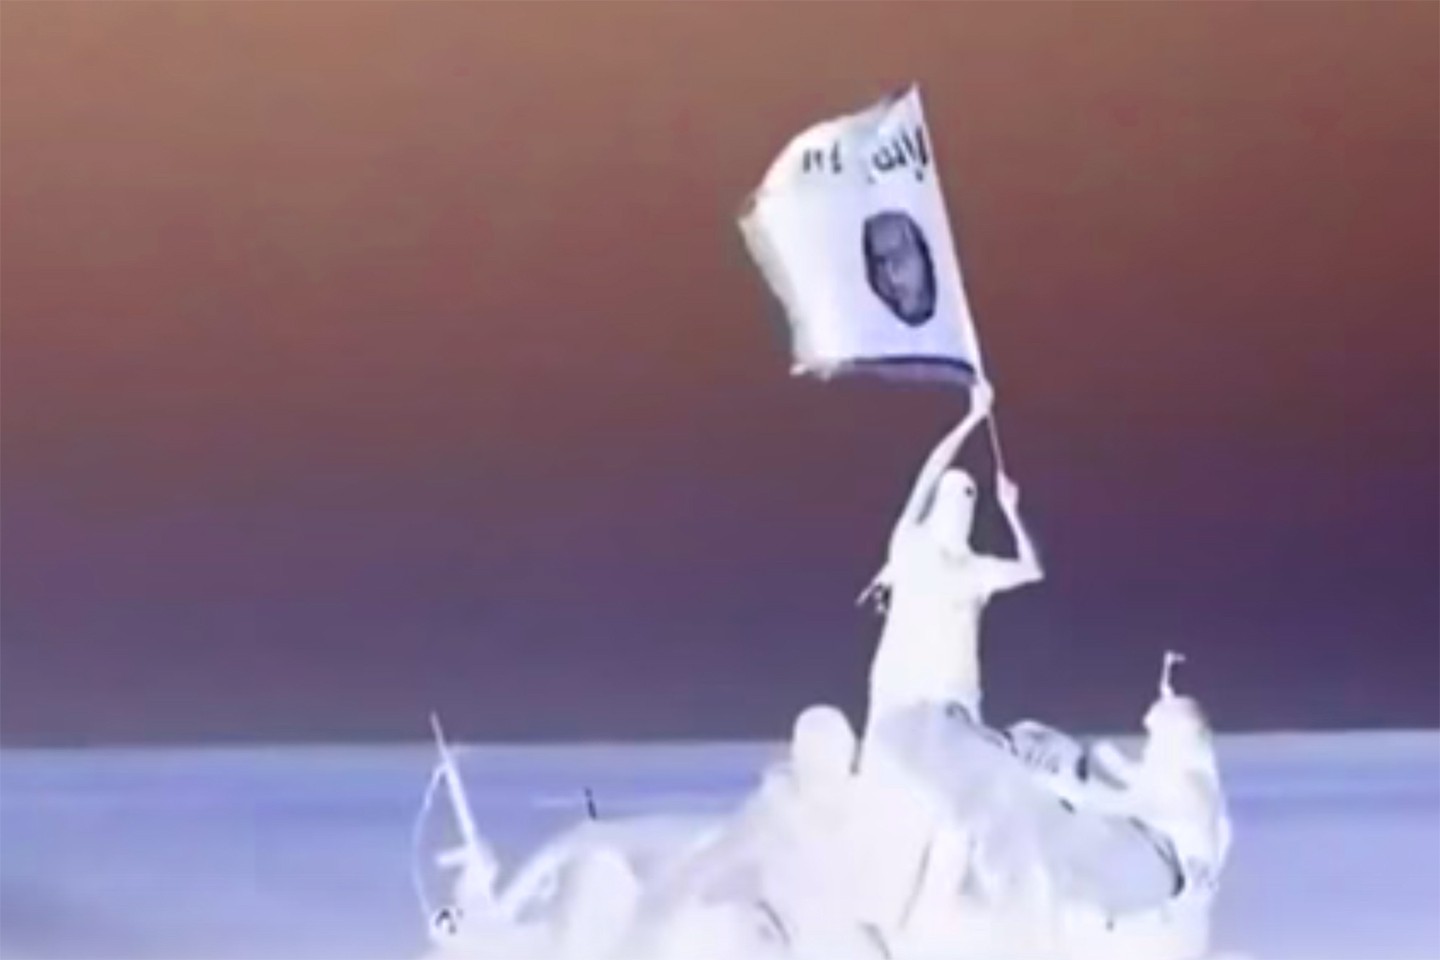 Le drapeau de Daesh